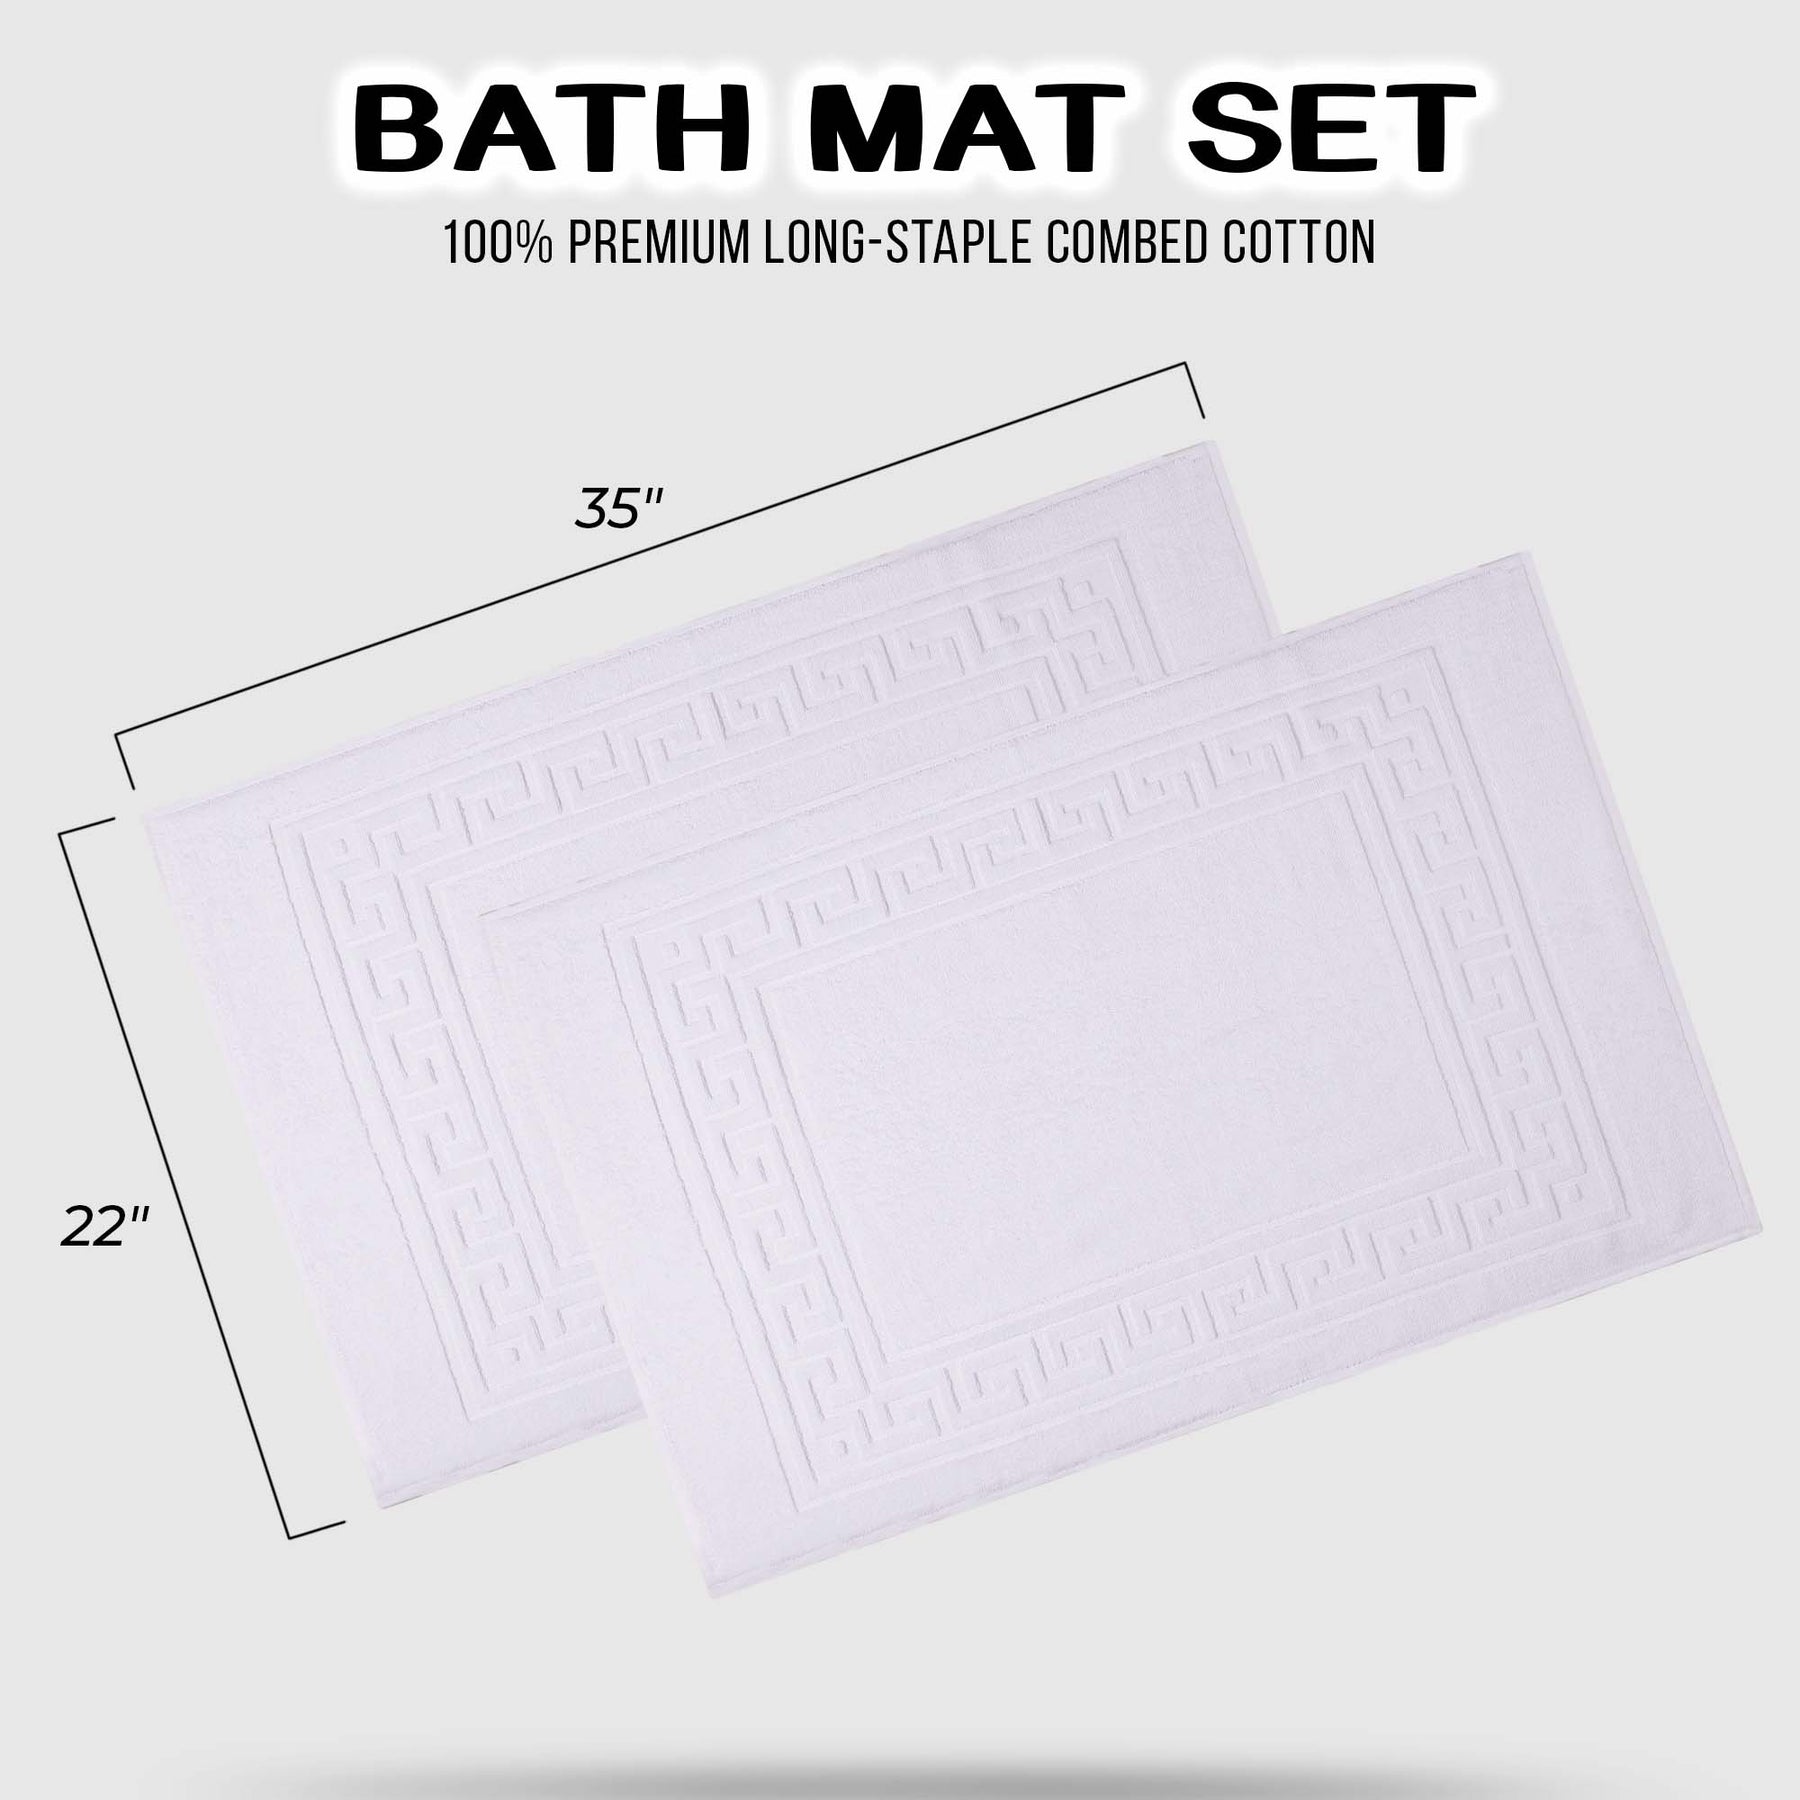 100% Cotton Highly-Absorbent Greek Key Border Solid 2-Piece Bath Mat Set - White